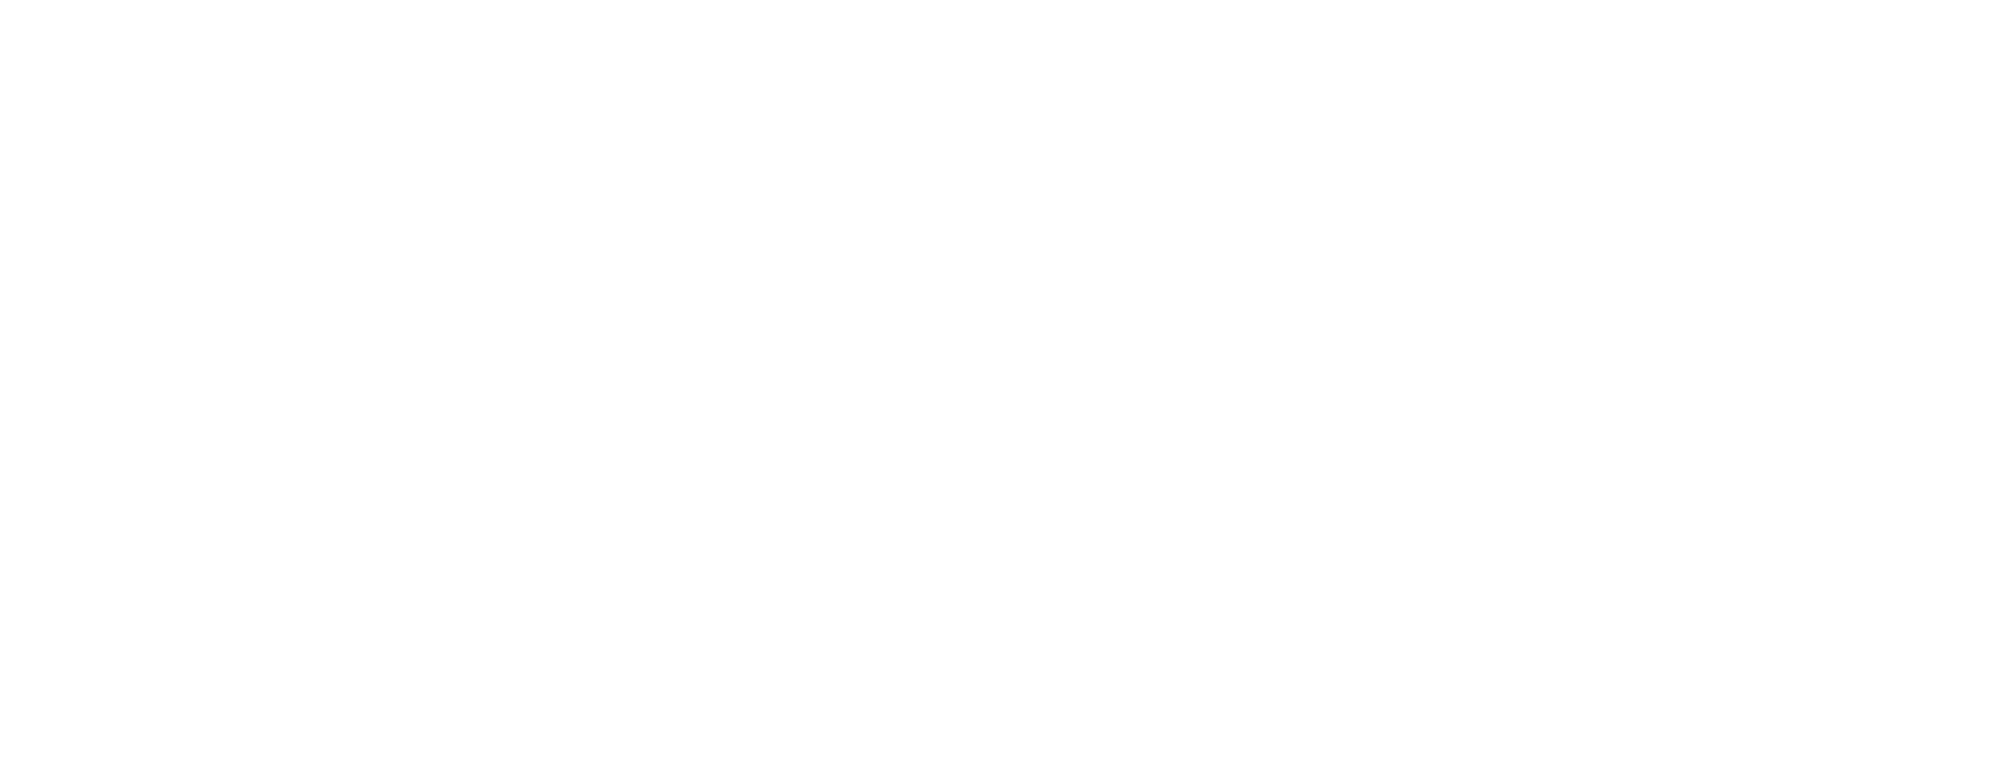 OpenFF Toolkit 0.10.1+119.g8acf6adb.dirty documentation logo